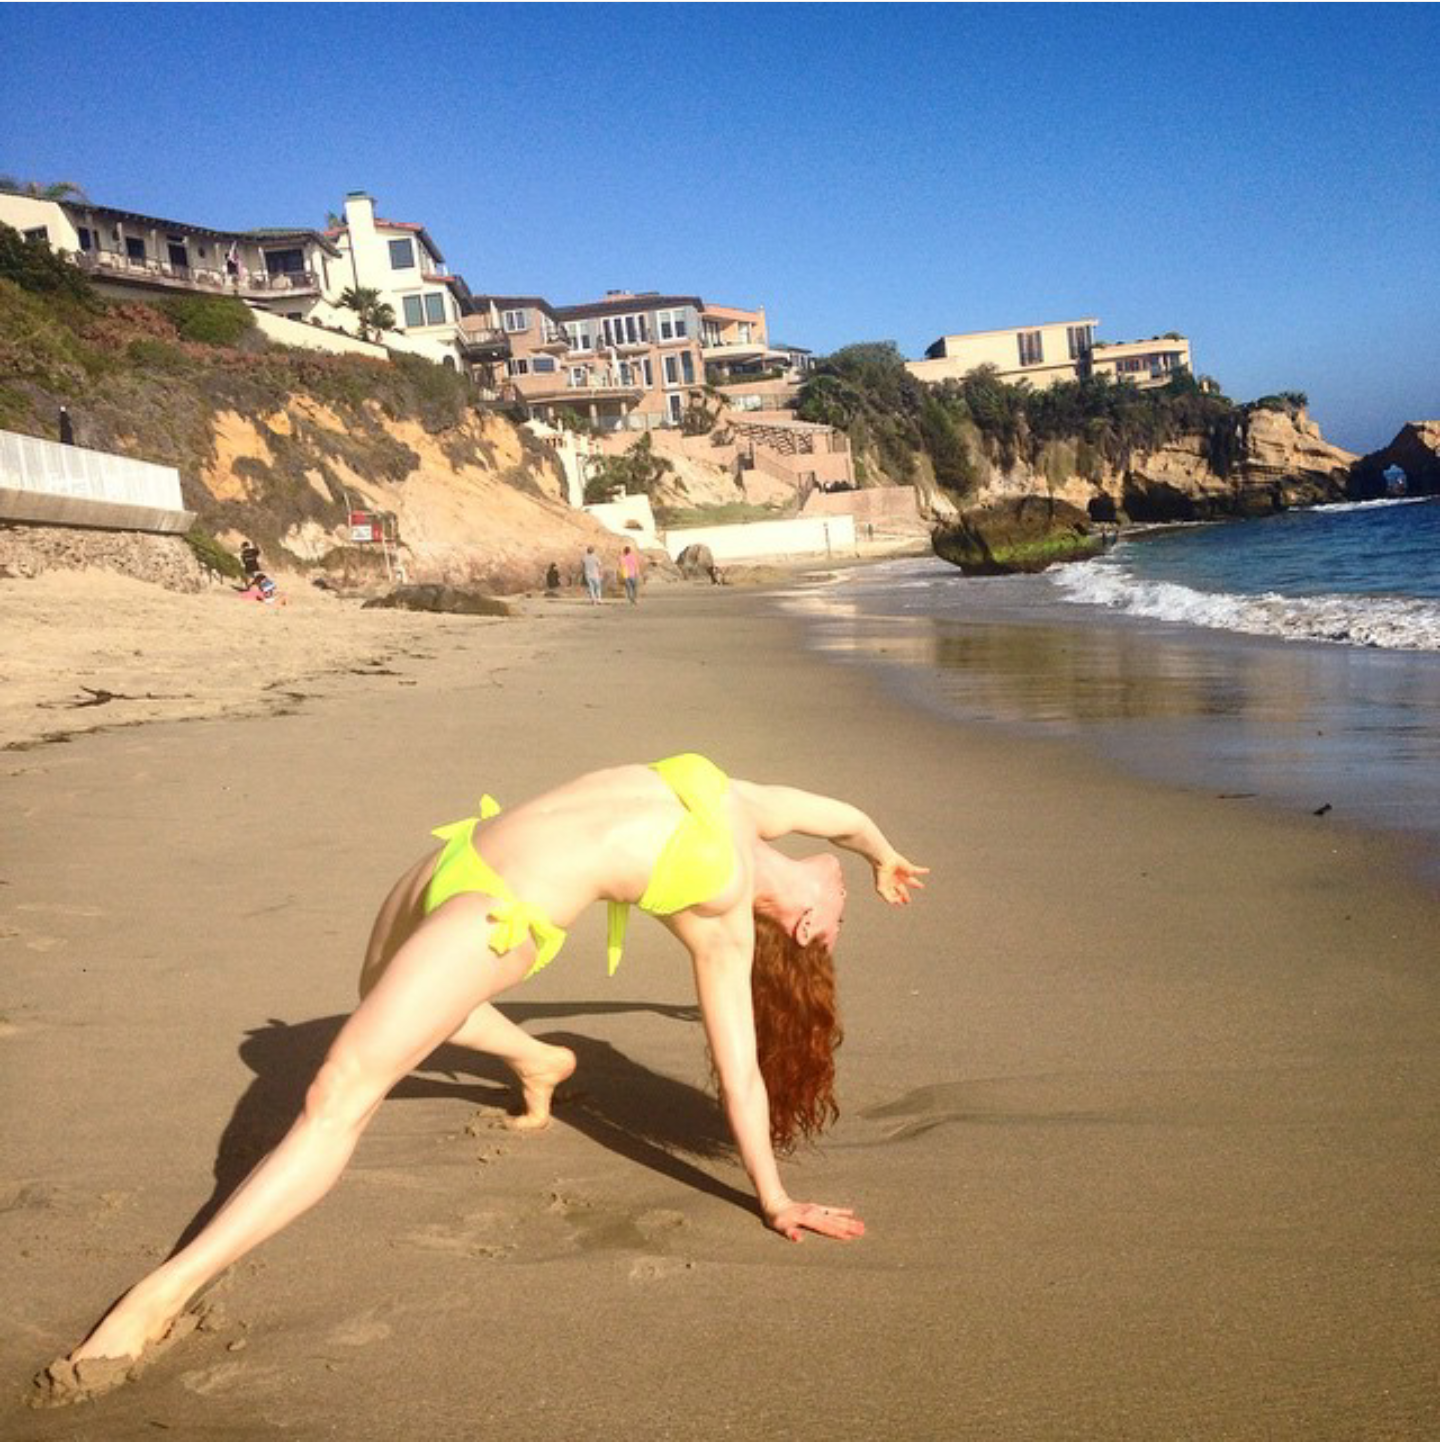 Amy Davidson in Bikini Doing Yoga - Instagram.